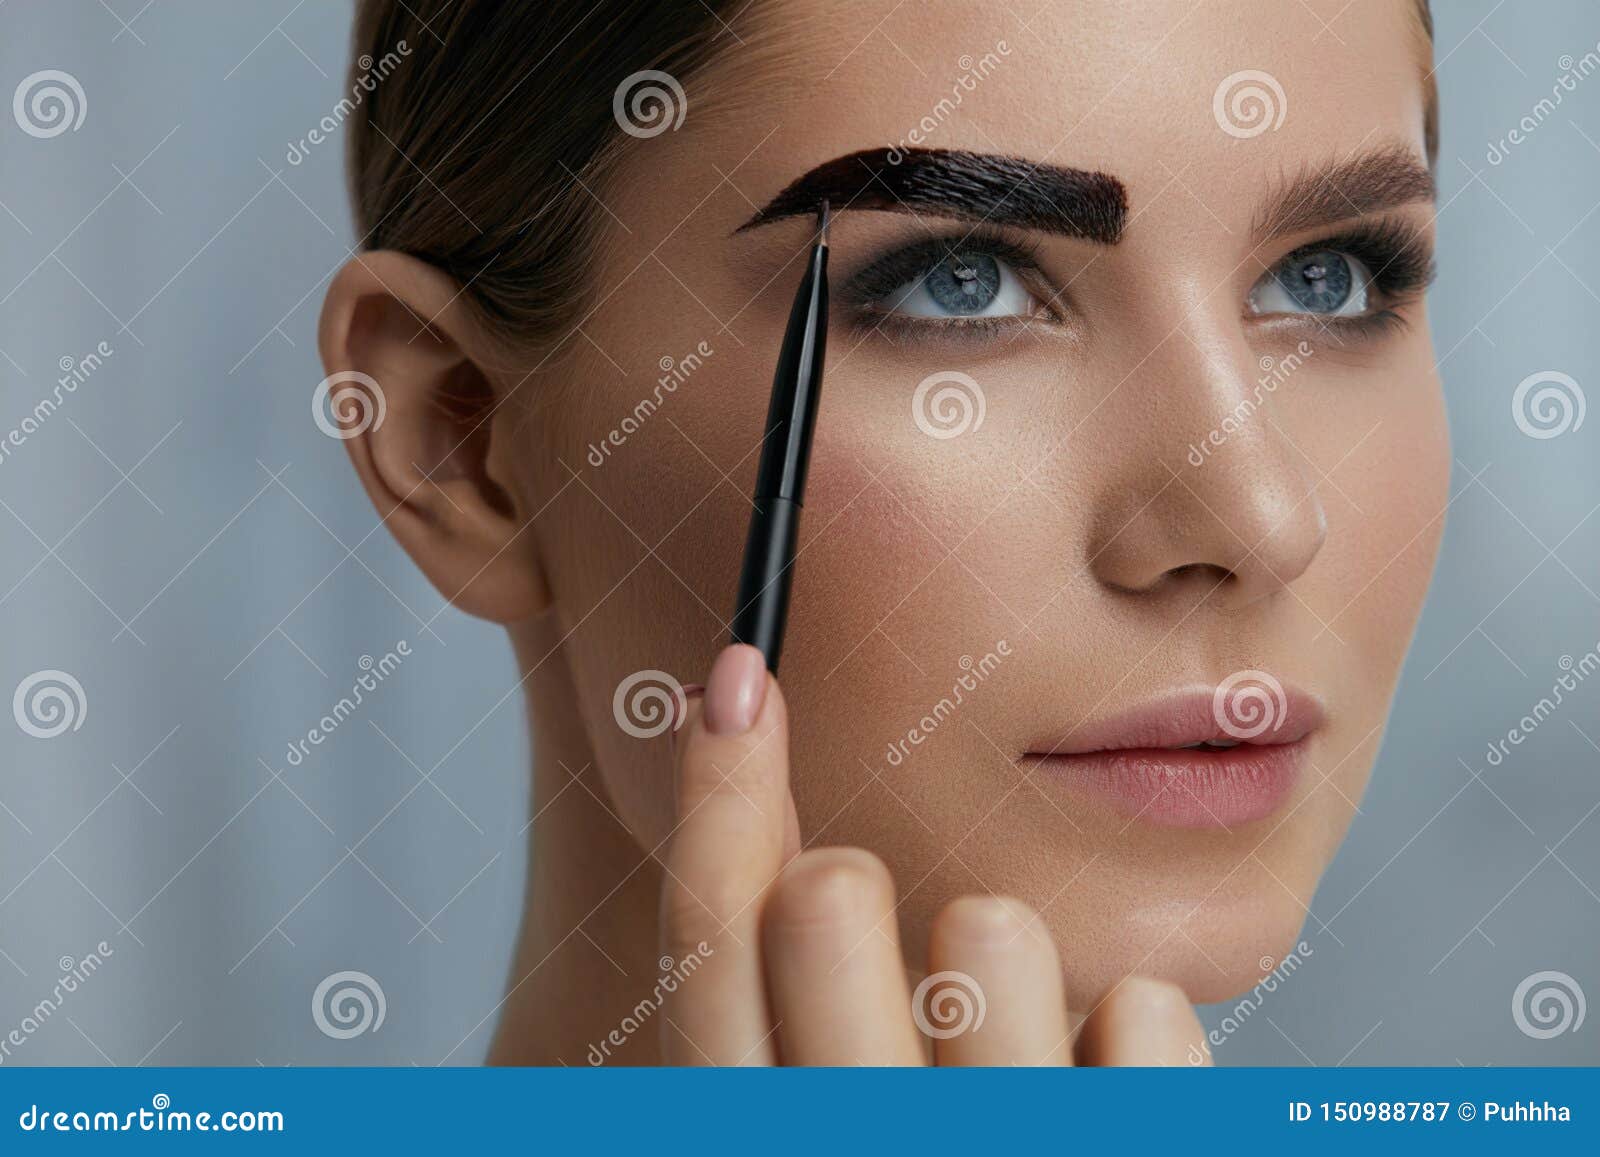 eyebrow coloring. woman applying brow tint with makeup brush